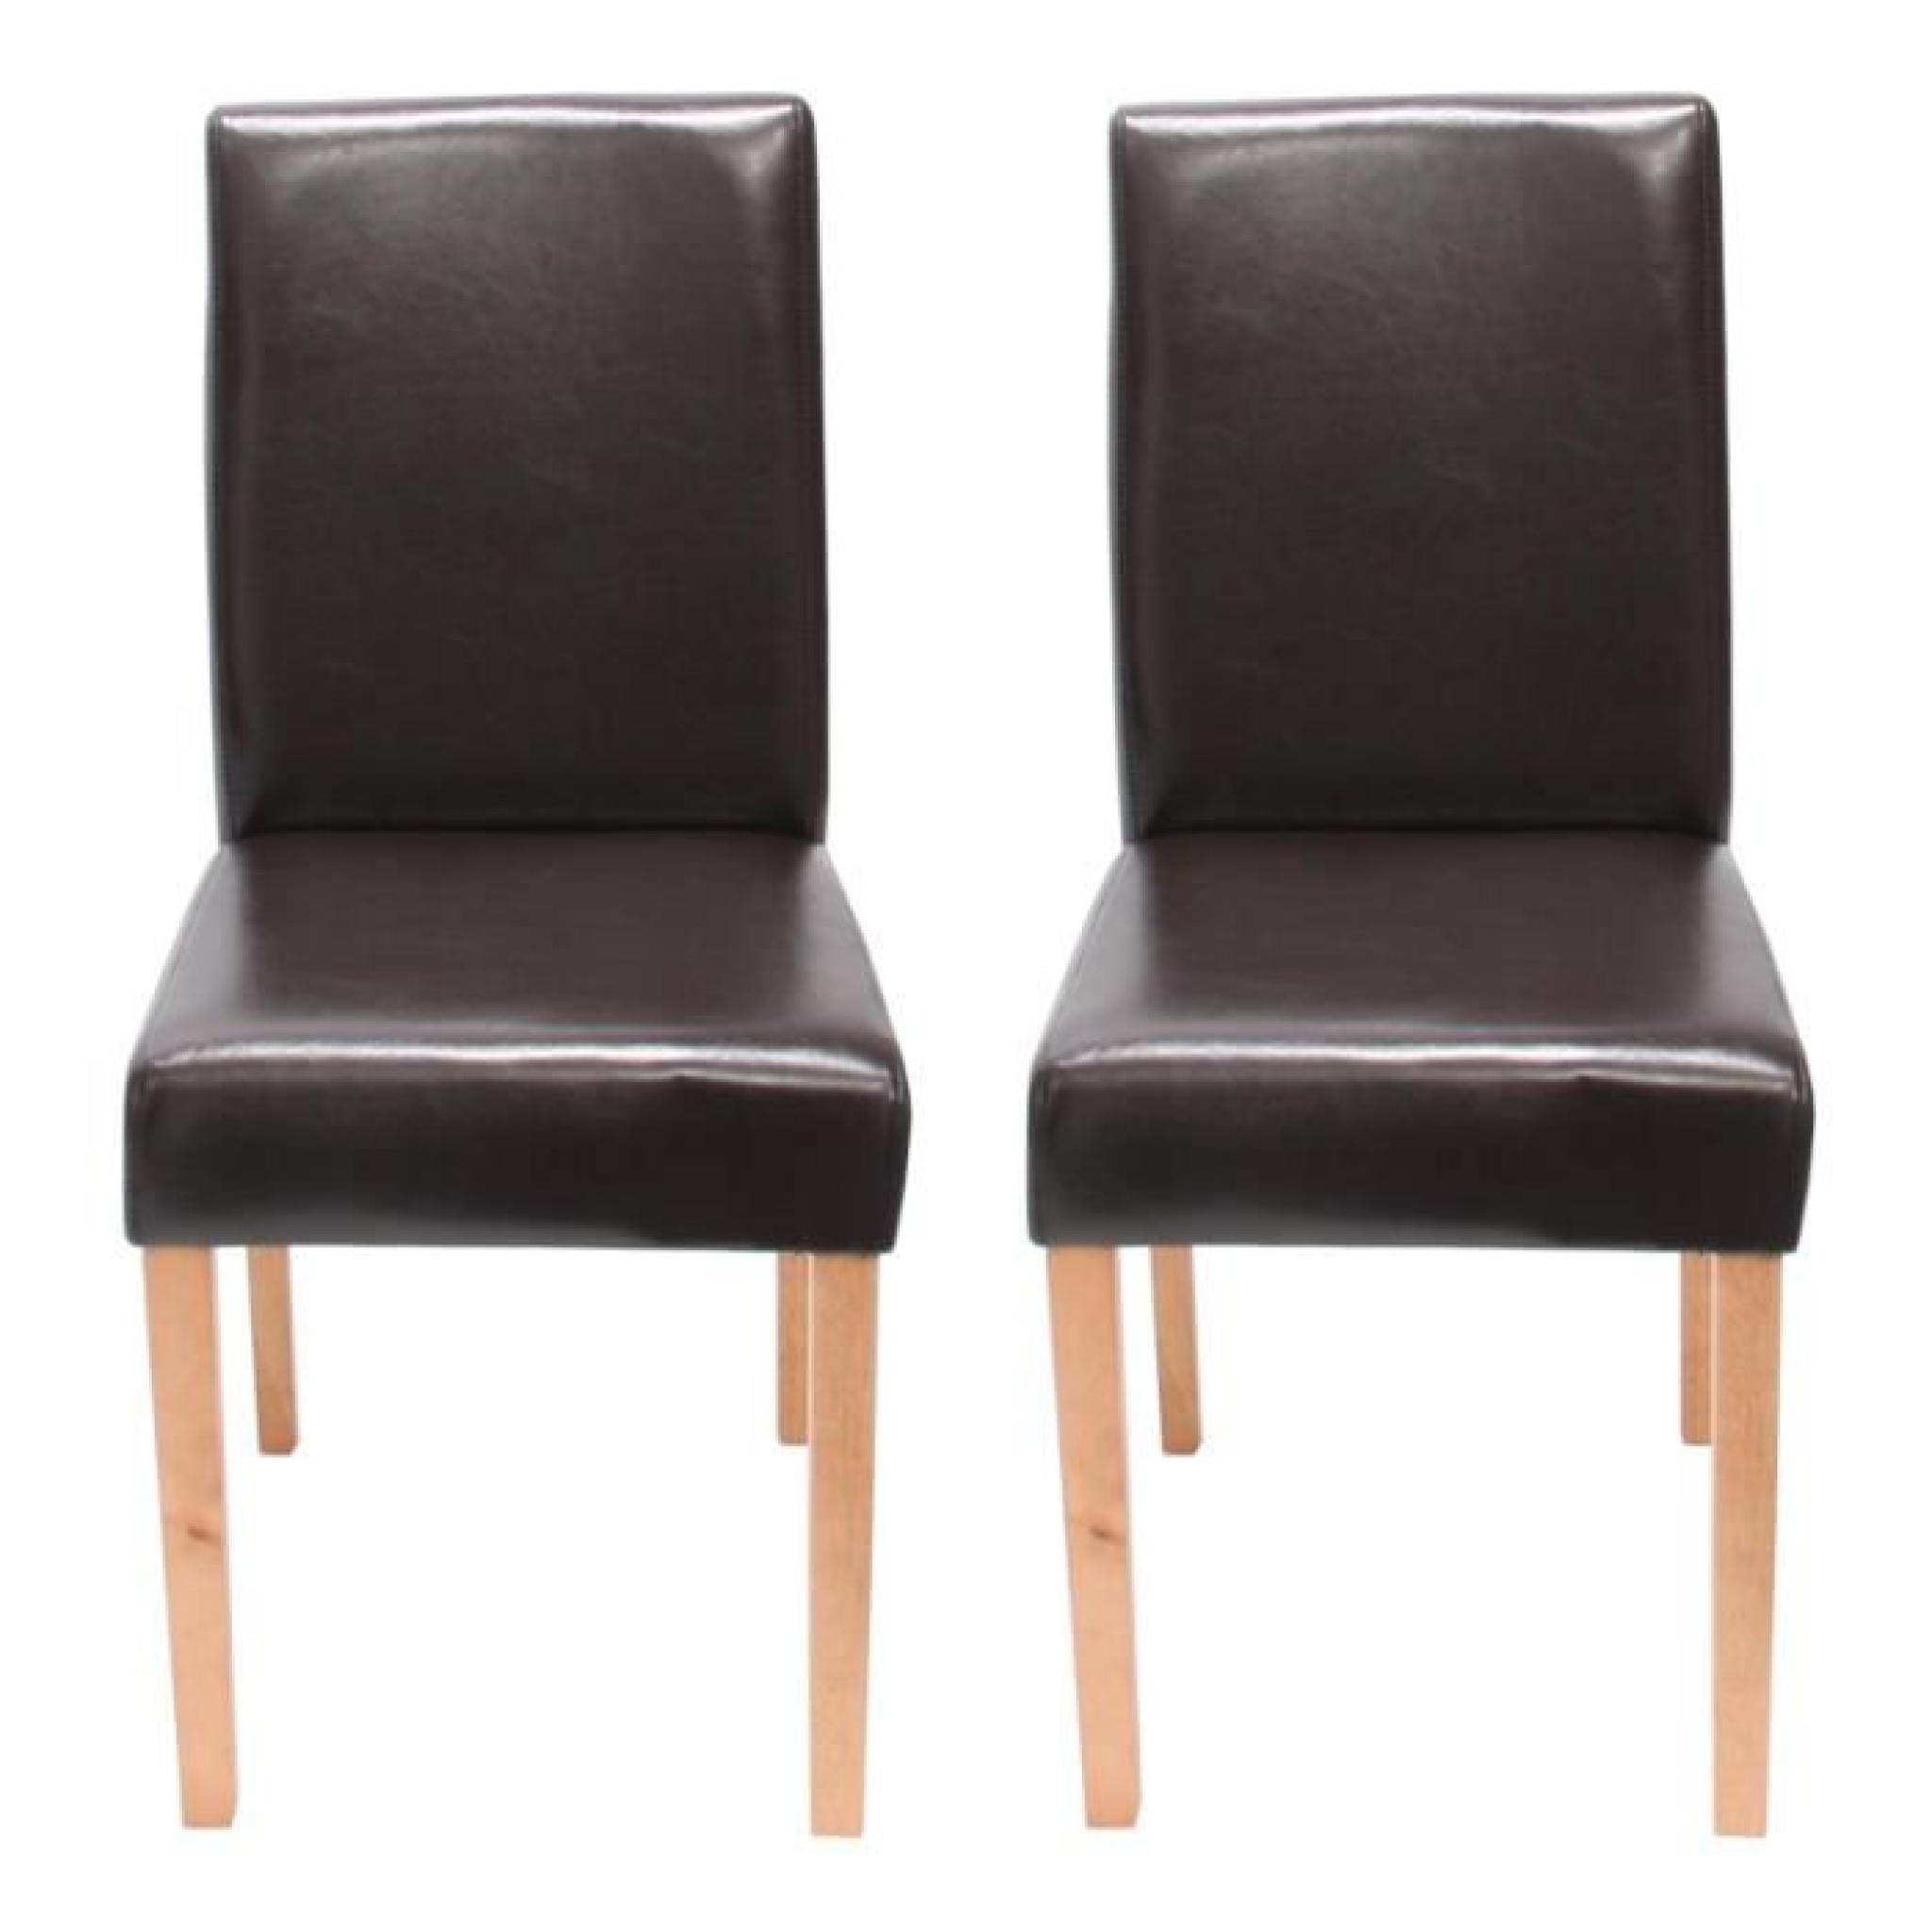  2 chaises Brun similicuir pieds clair bois